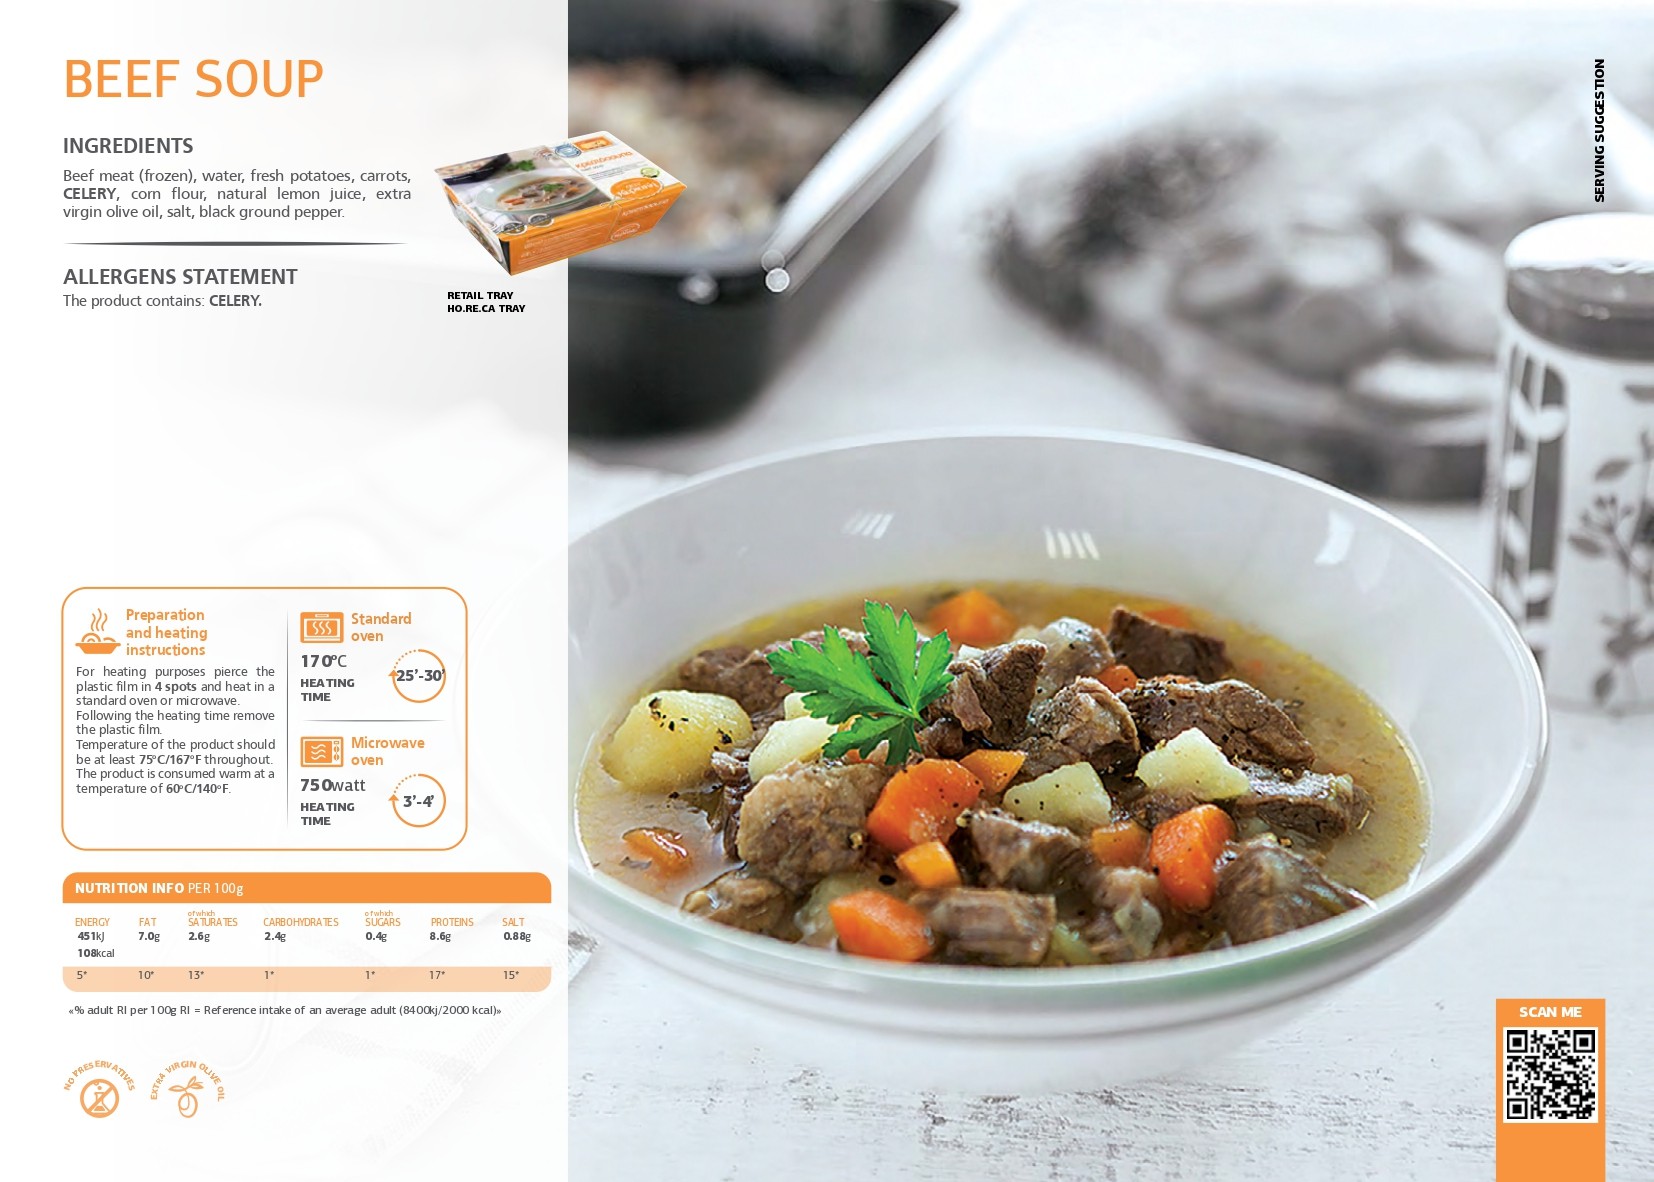 SK - Beef soup pdf image